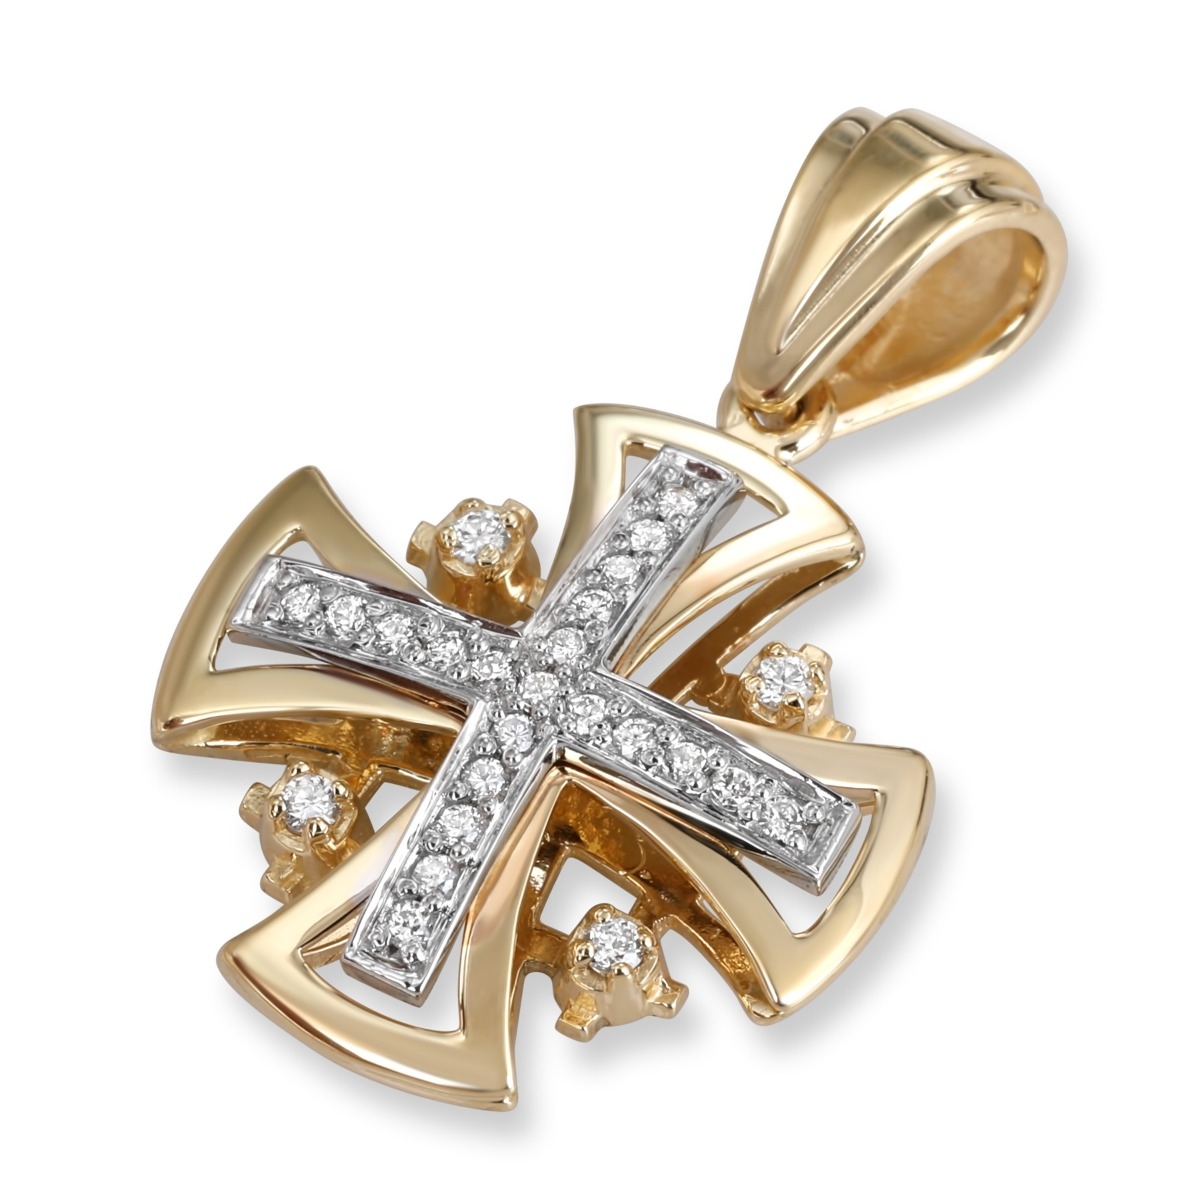 Anbinder Jewelry Two Tone 14K White & Yellow Gold Rounded Jerusalem Cross Pendant with 25 Diamonds - 1